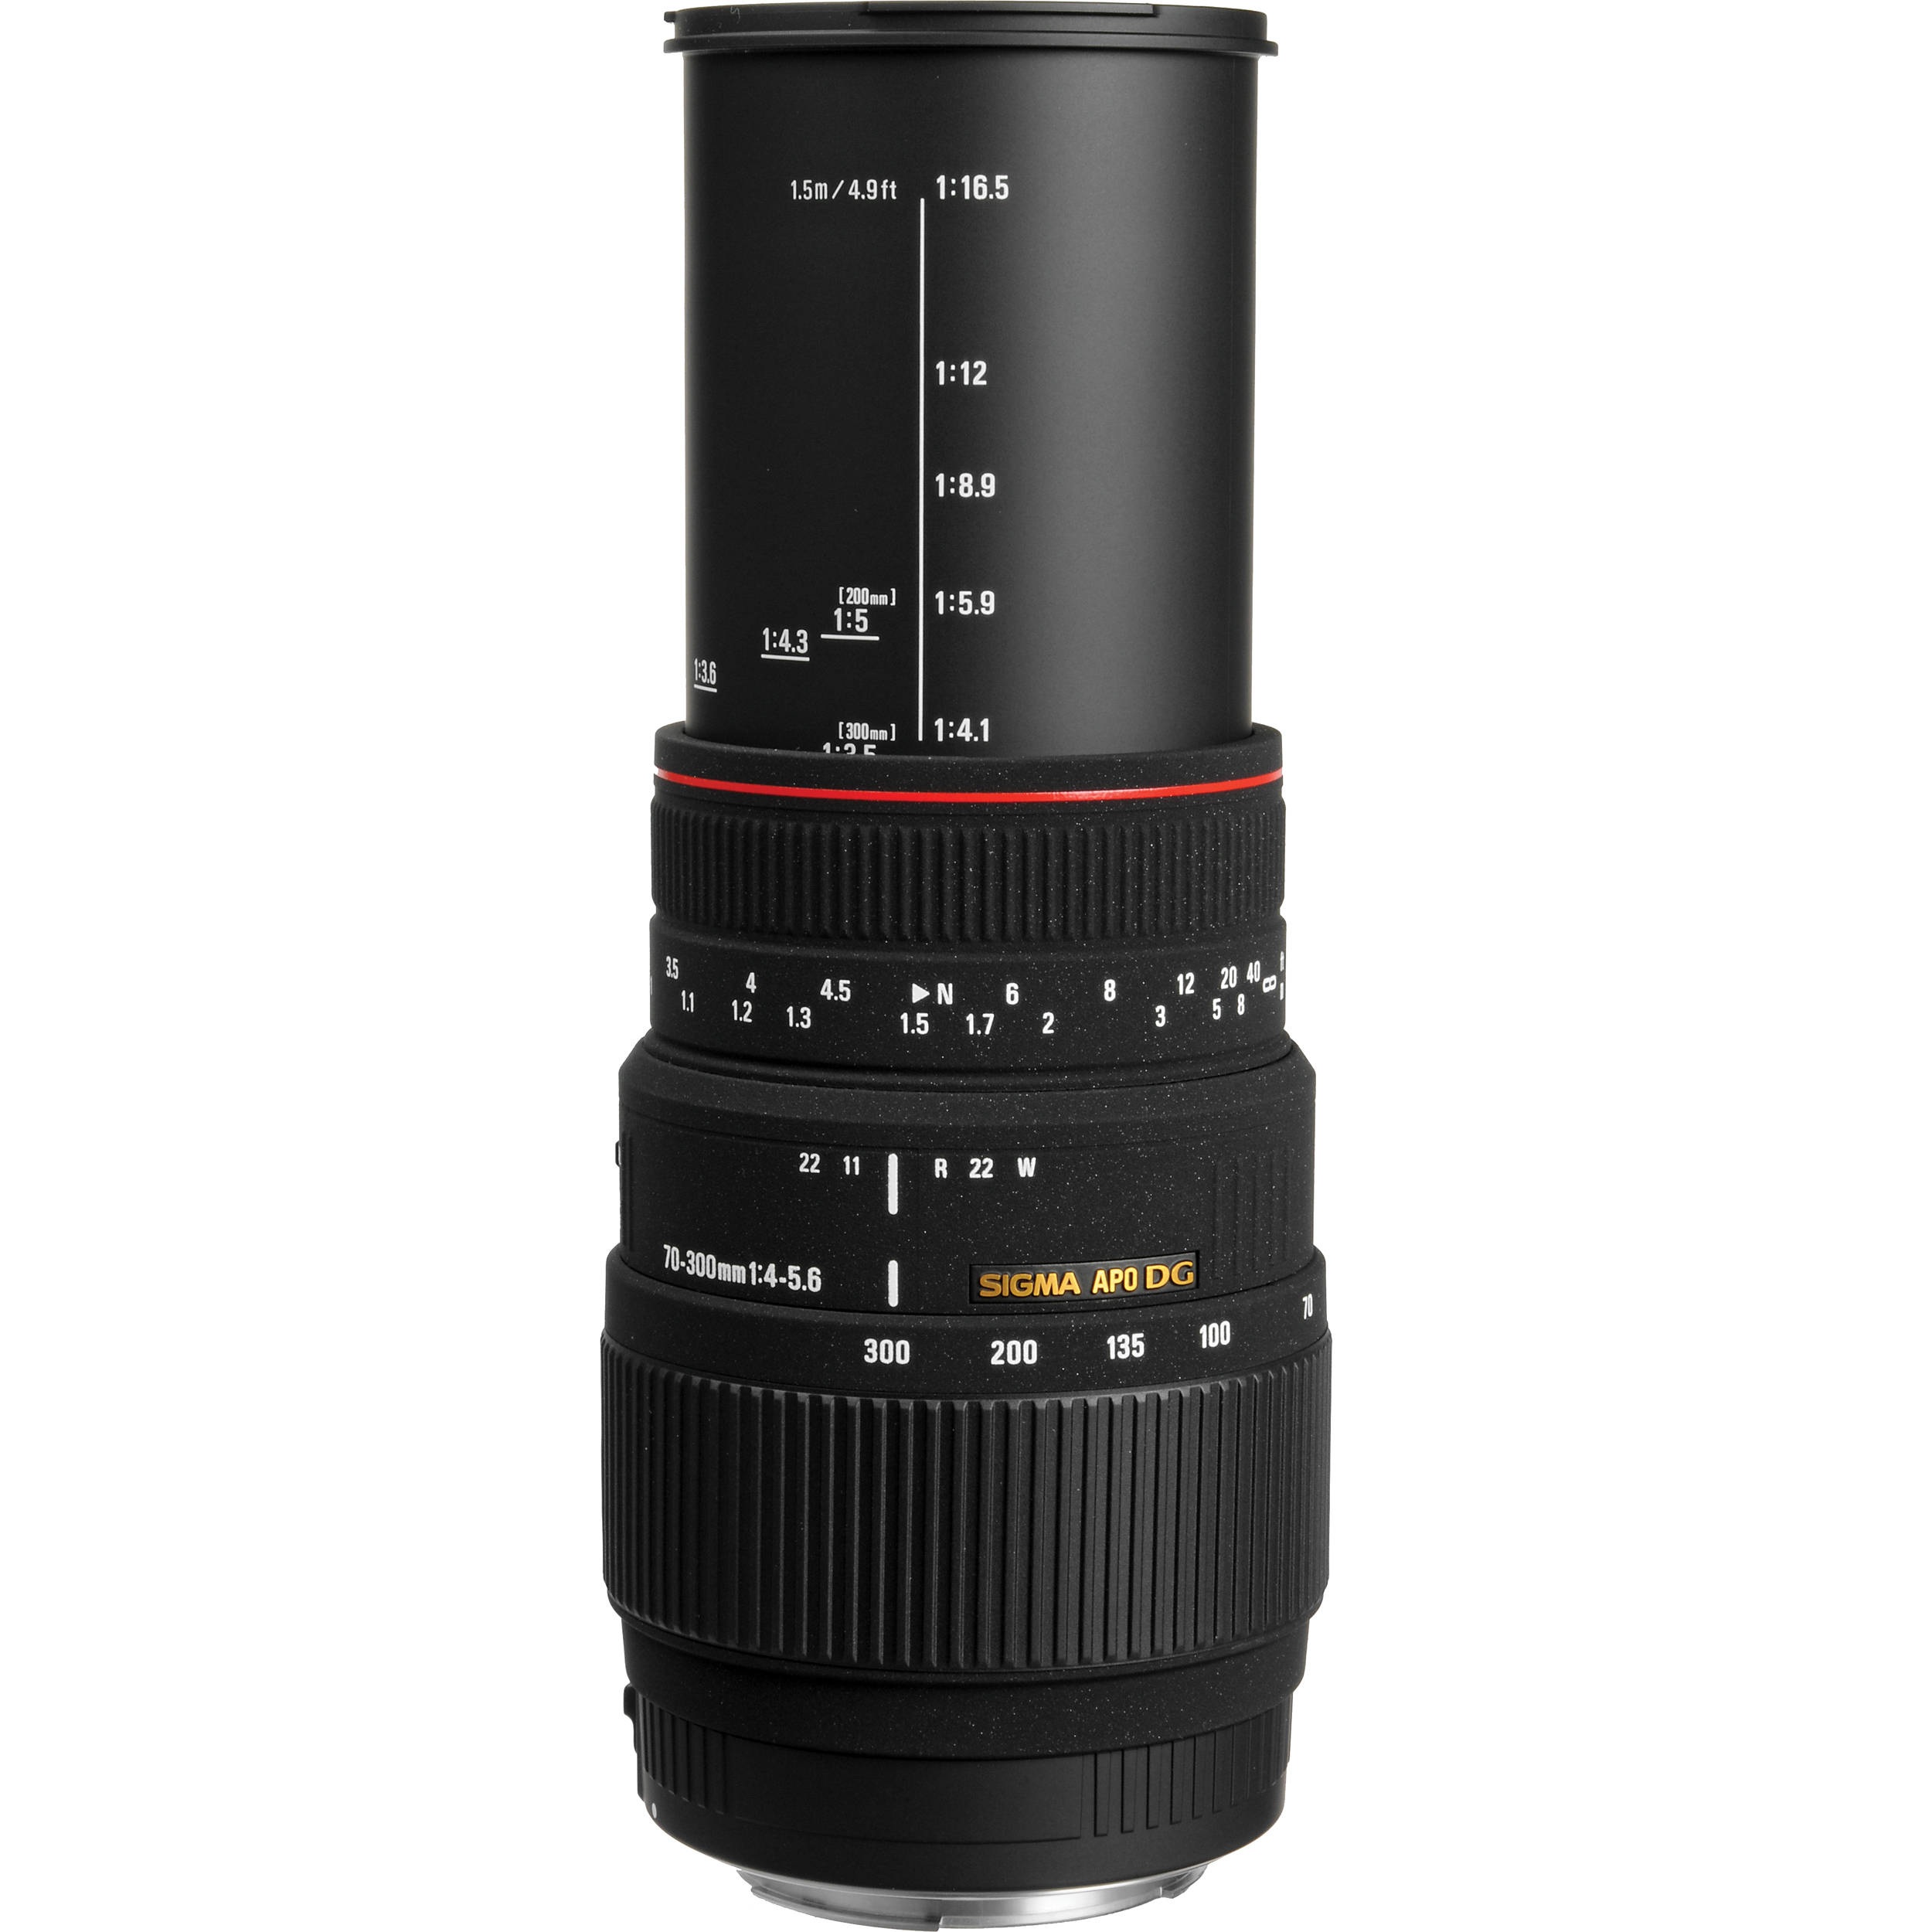 Sigma 70 300mm F 4 5 6 Apo Dg Macro Lens For Canon Eos